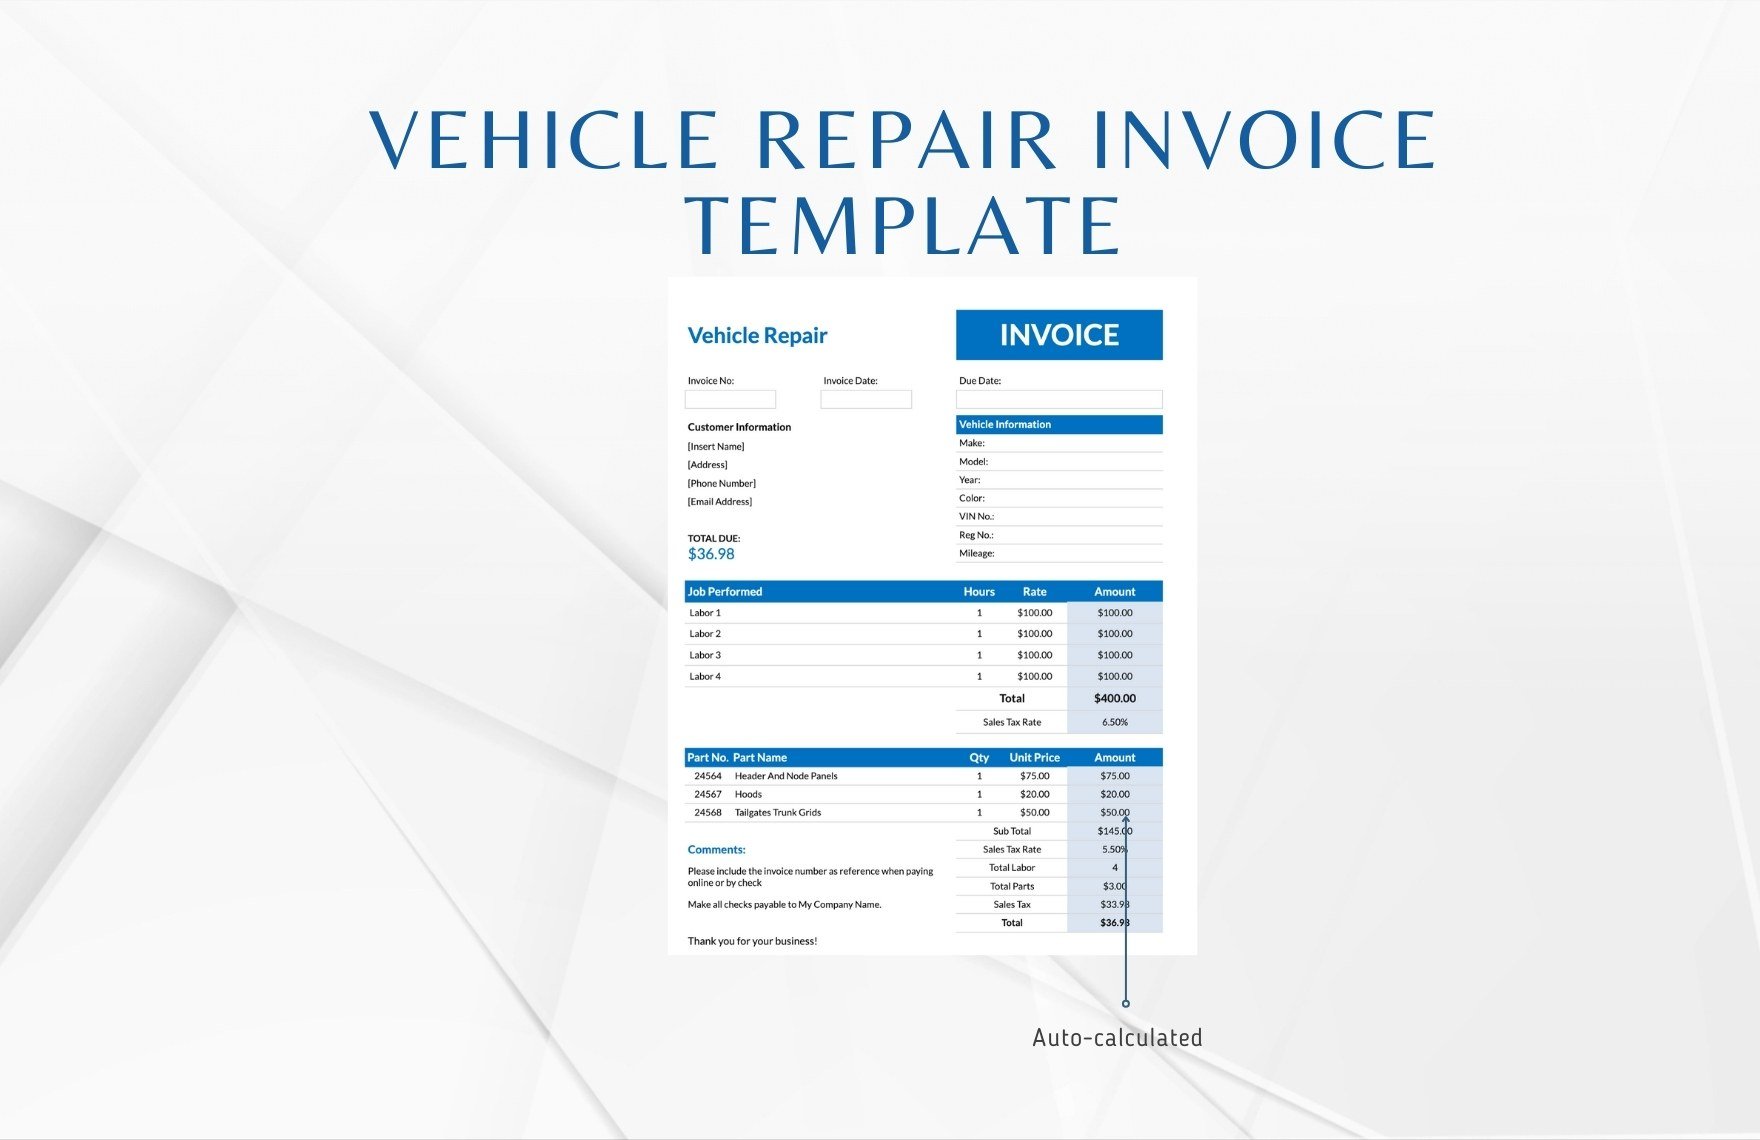 Vehicle Repair Invoice Template